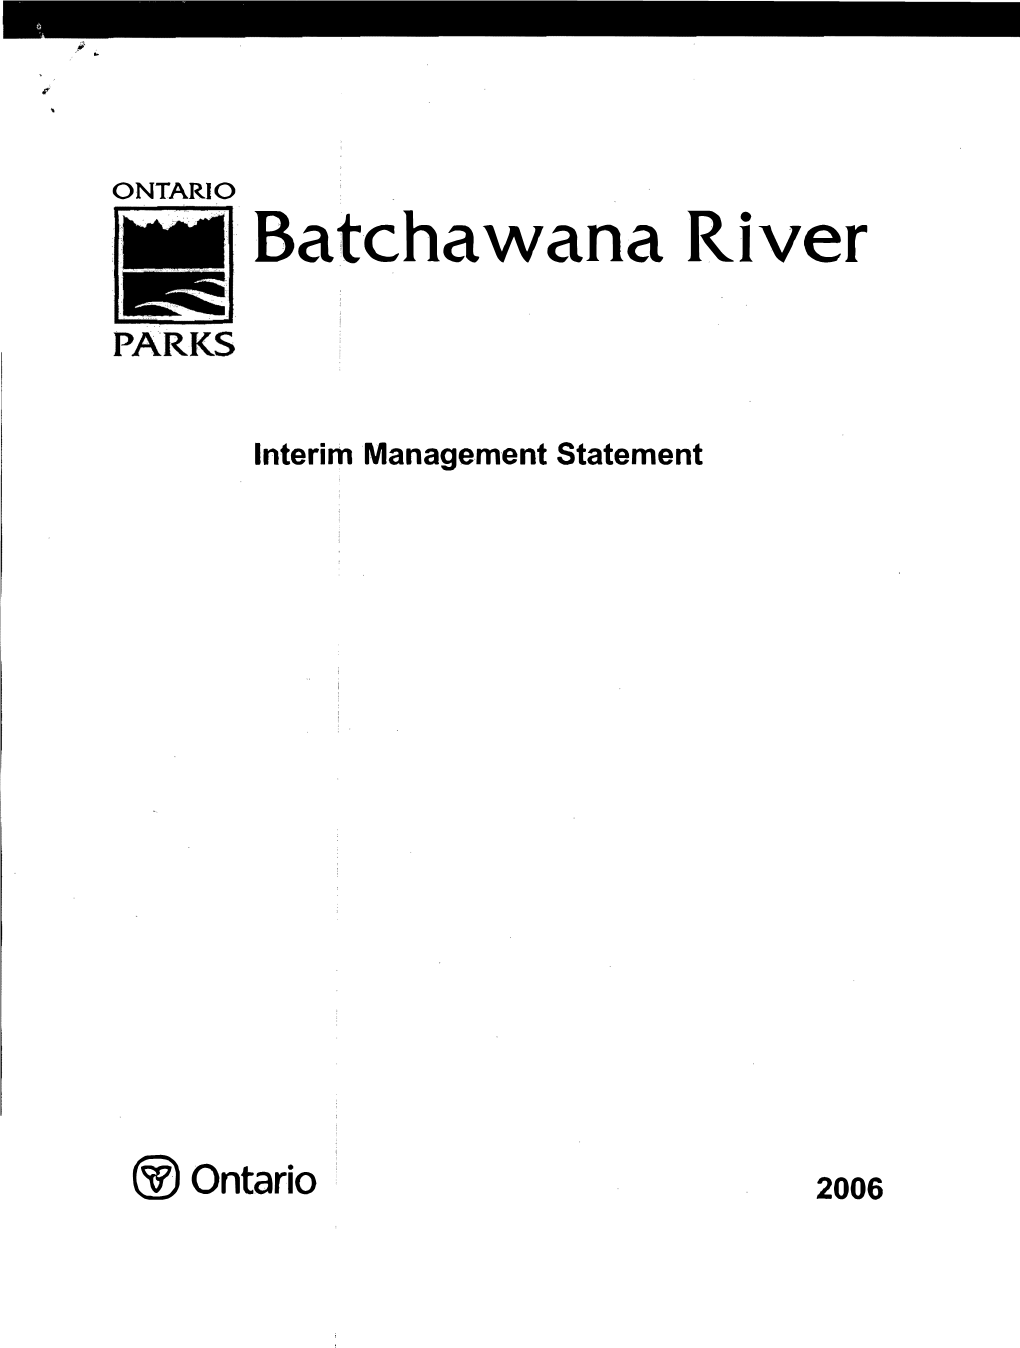 Batchawana River